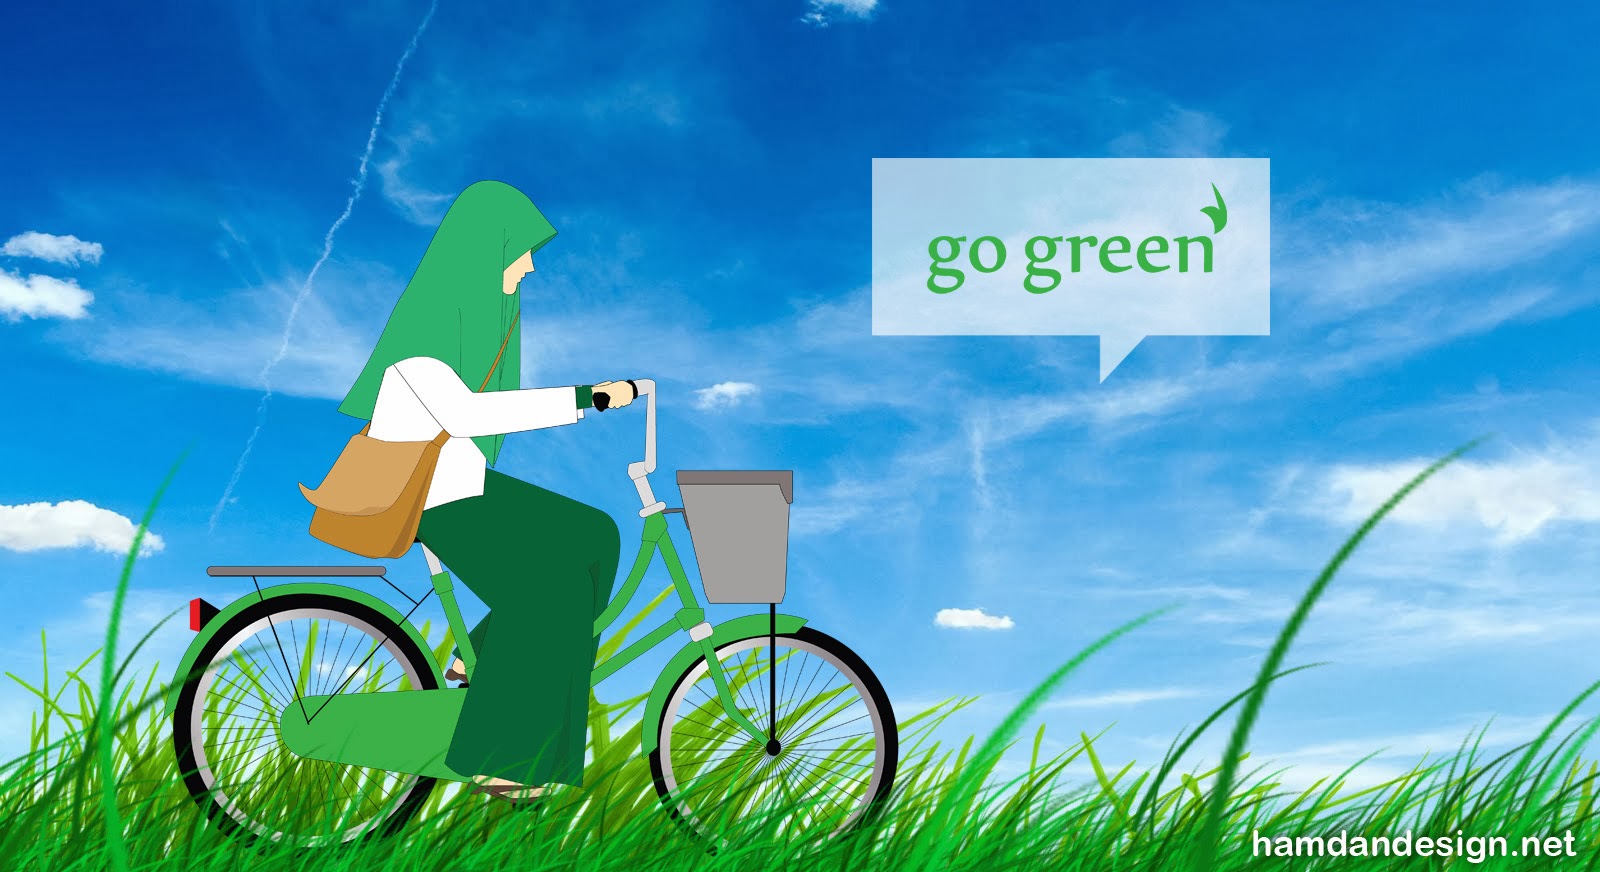  Kartun Akhwat Muslimah Bersepeda Go Green Kartun 